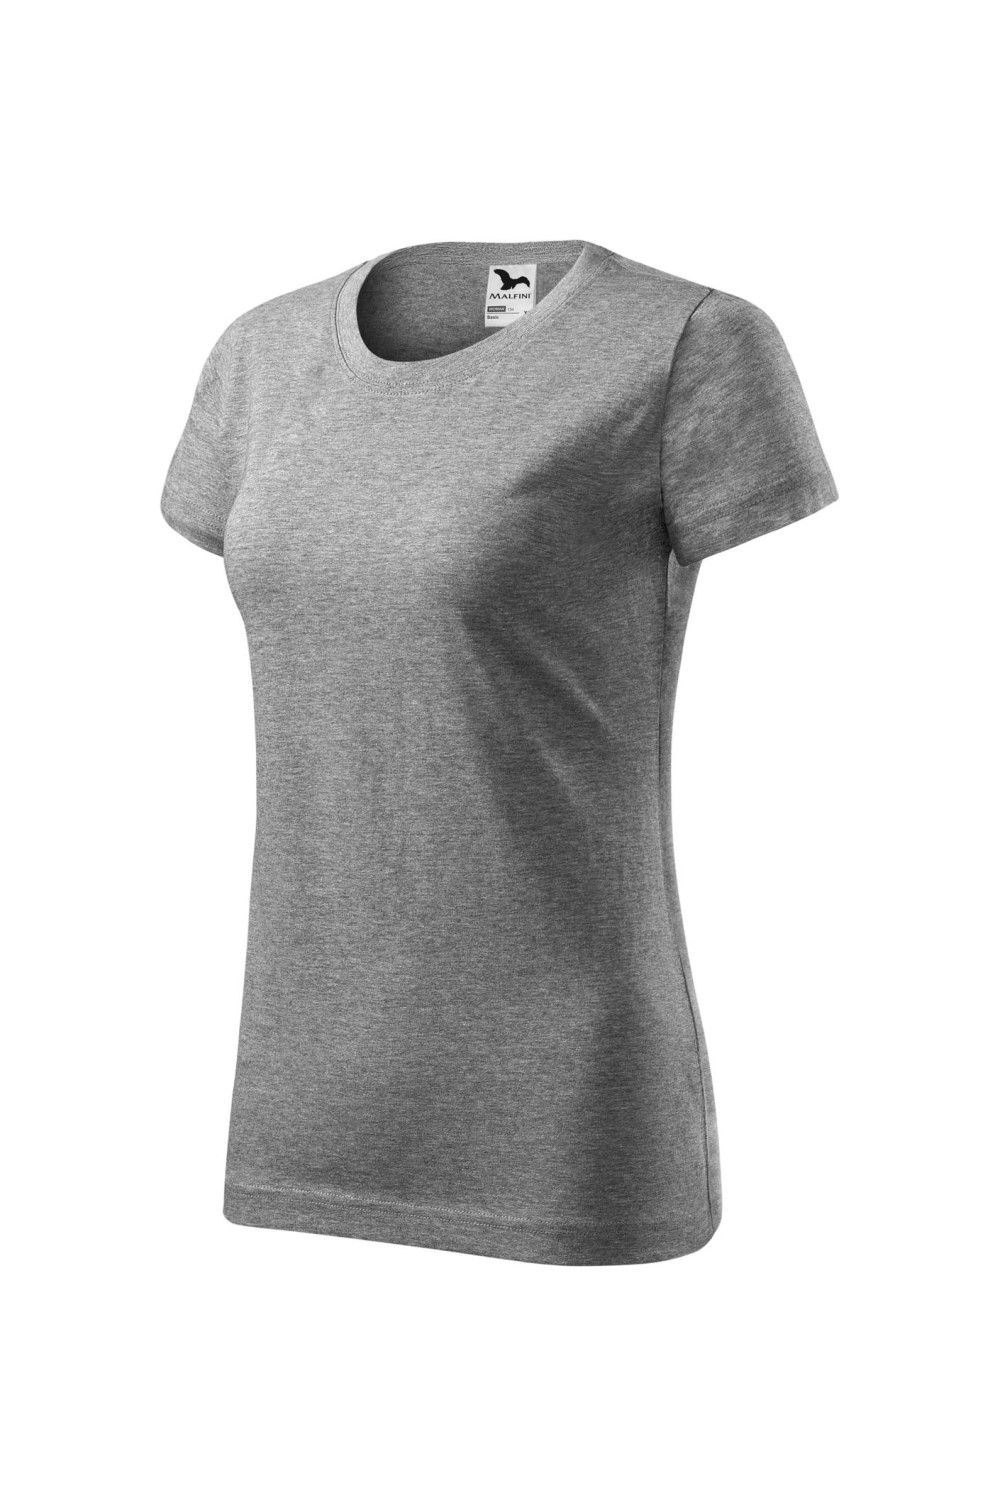 BASIC 134 MALFINI Koszulka damska 100% bawełna t-shirt ciemnoszary melanż